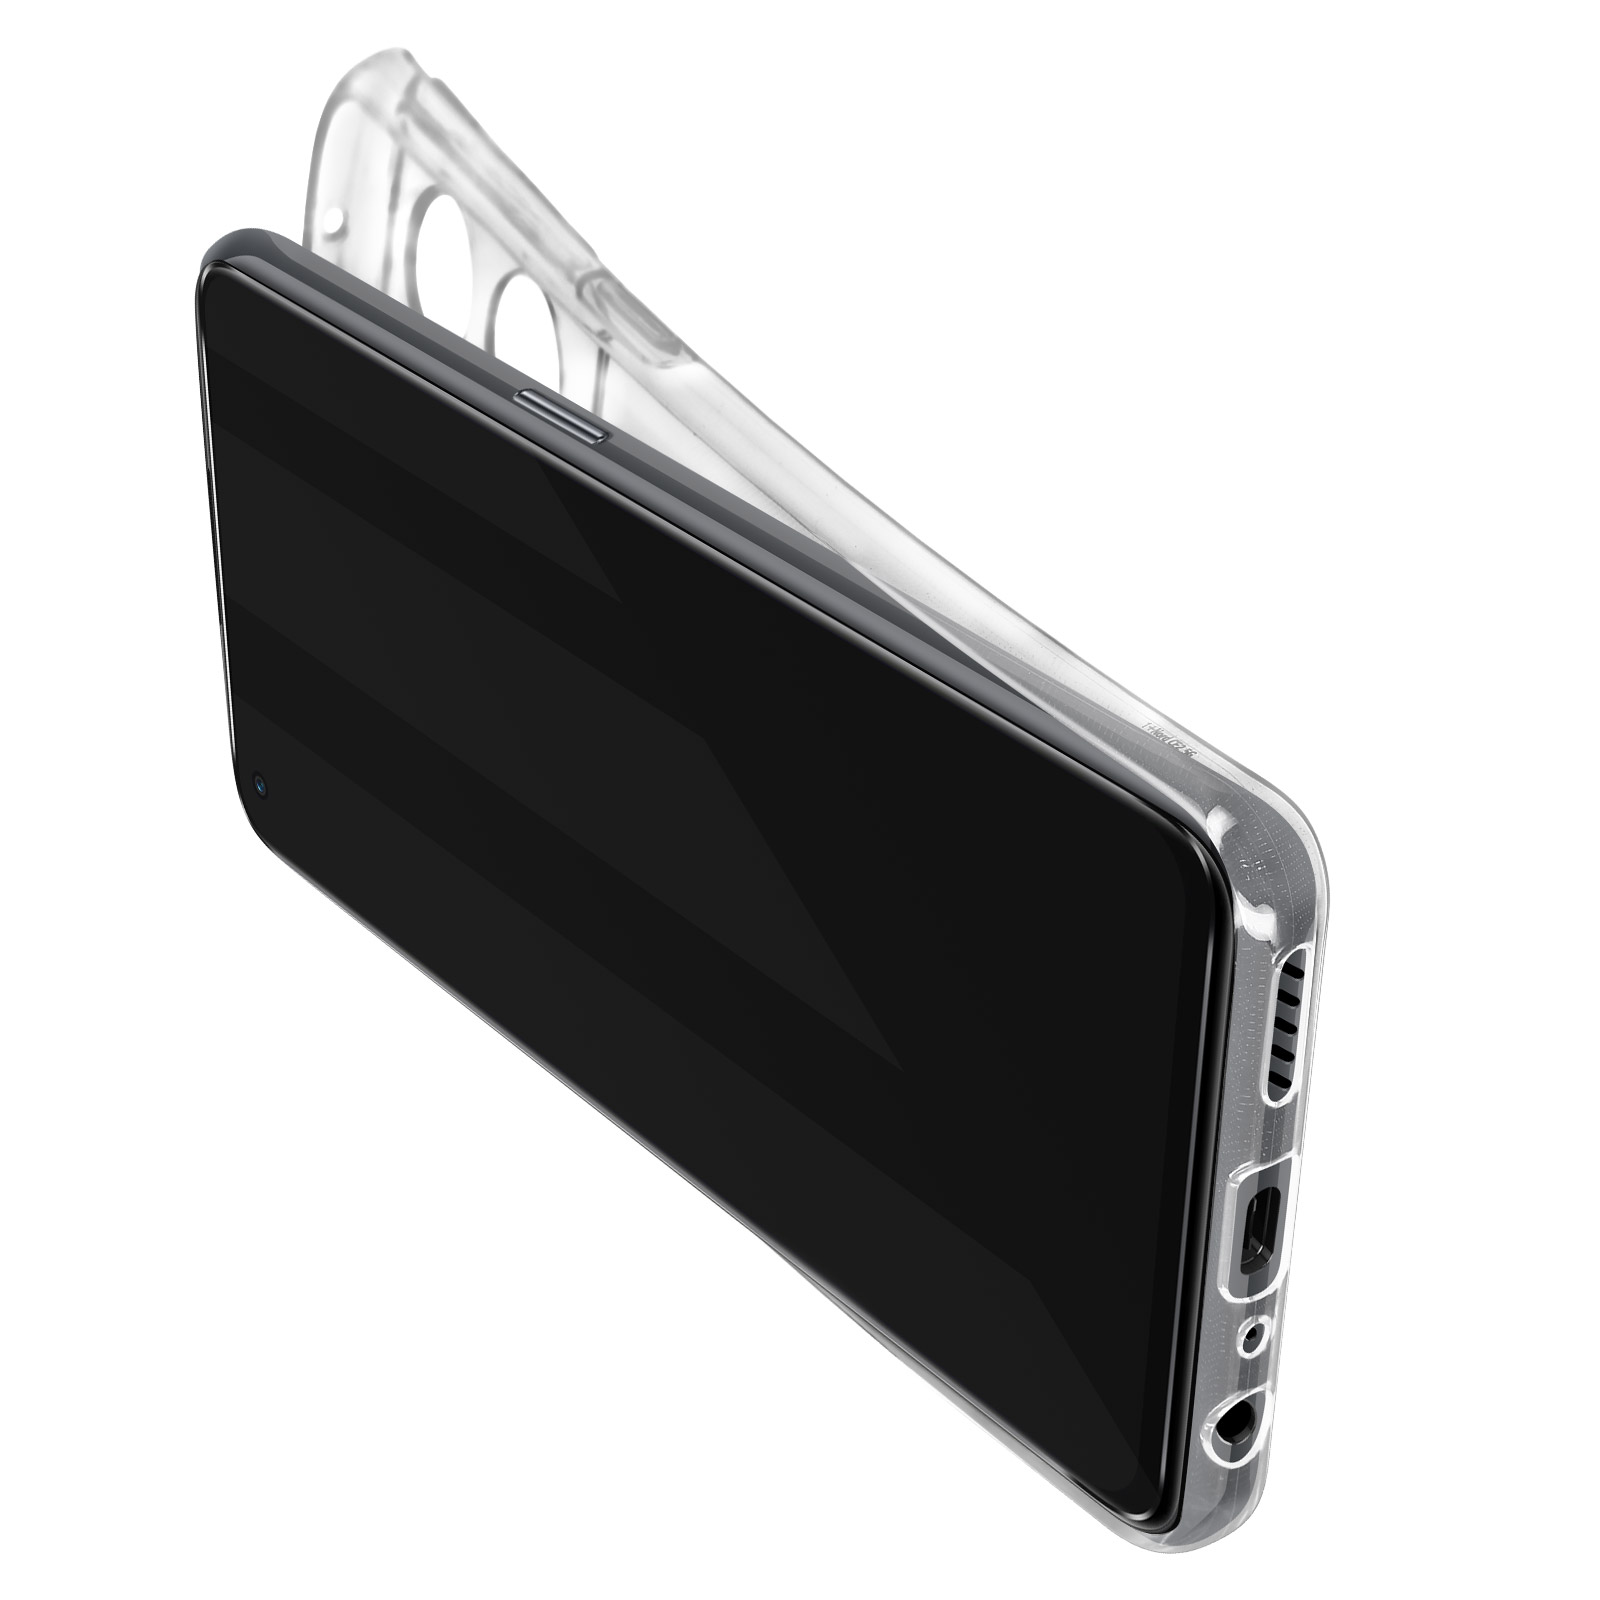 AVIZAR Set Series, Backcover, CE 2 Nord OnePlus, 5G, Transparent